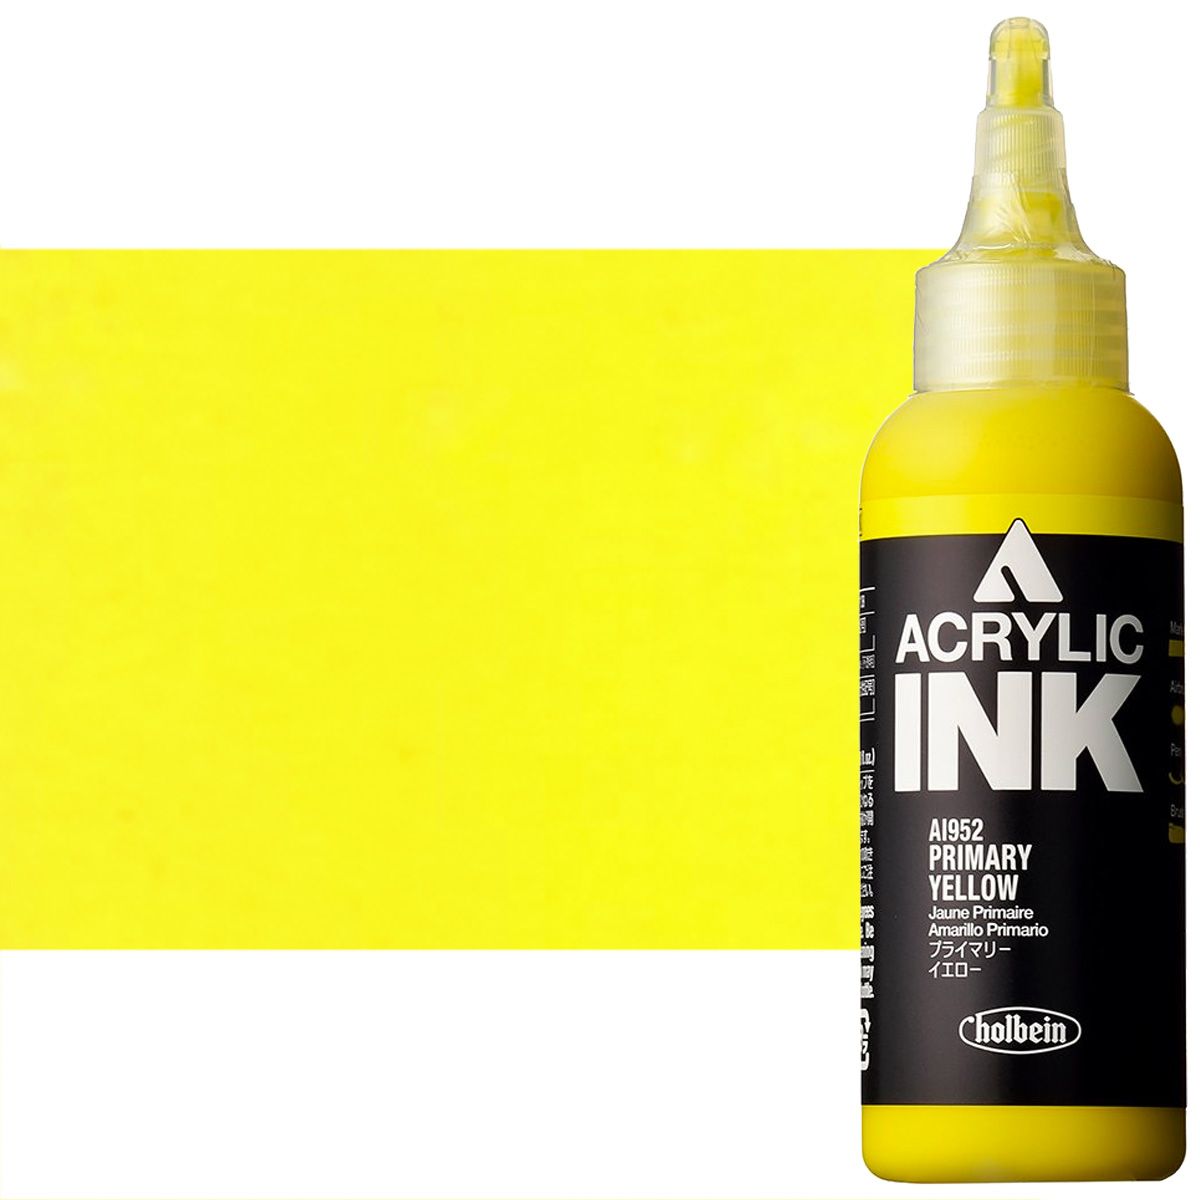 Holbein Acrylic Ink - Primary Yellow, 100ml